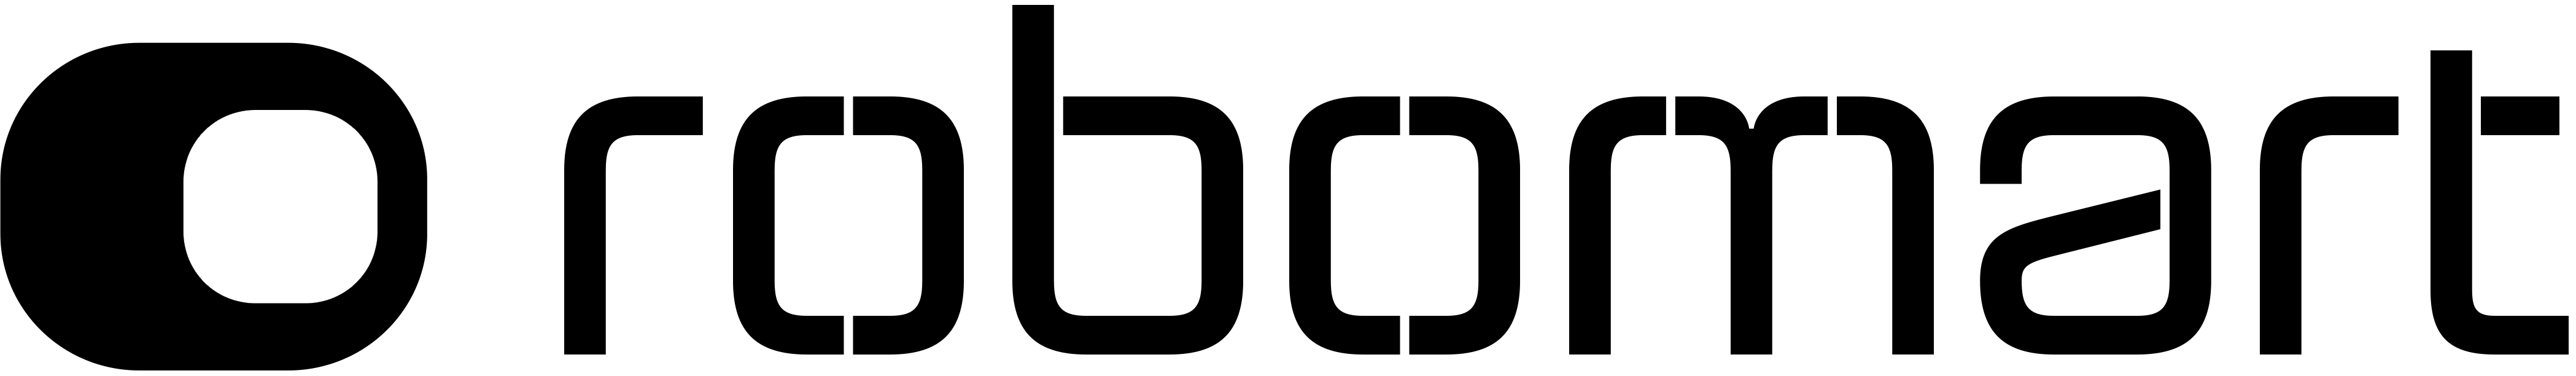 Logo-Final-Black.png